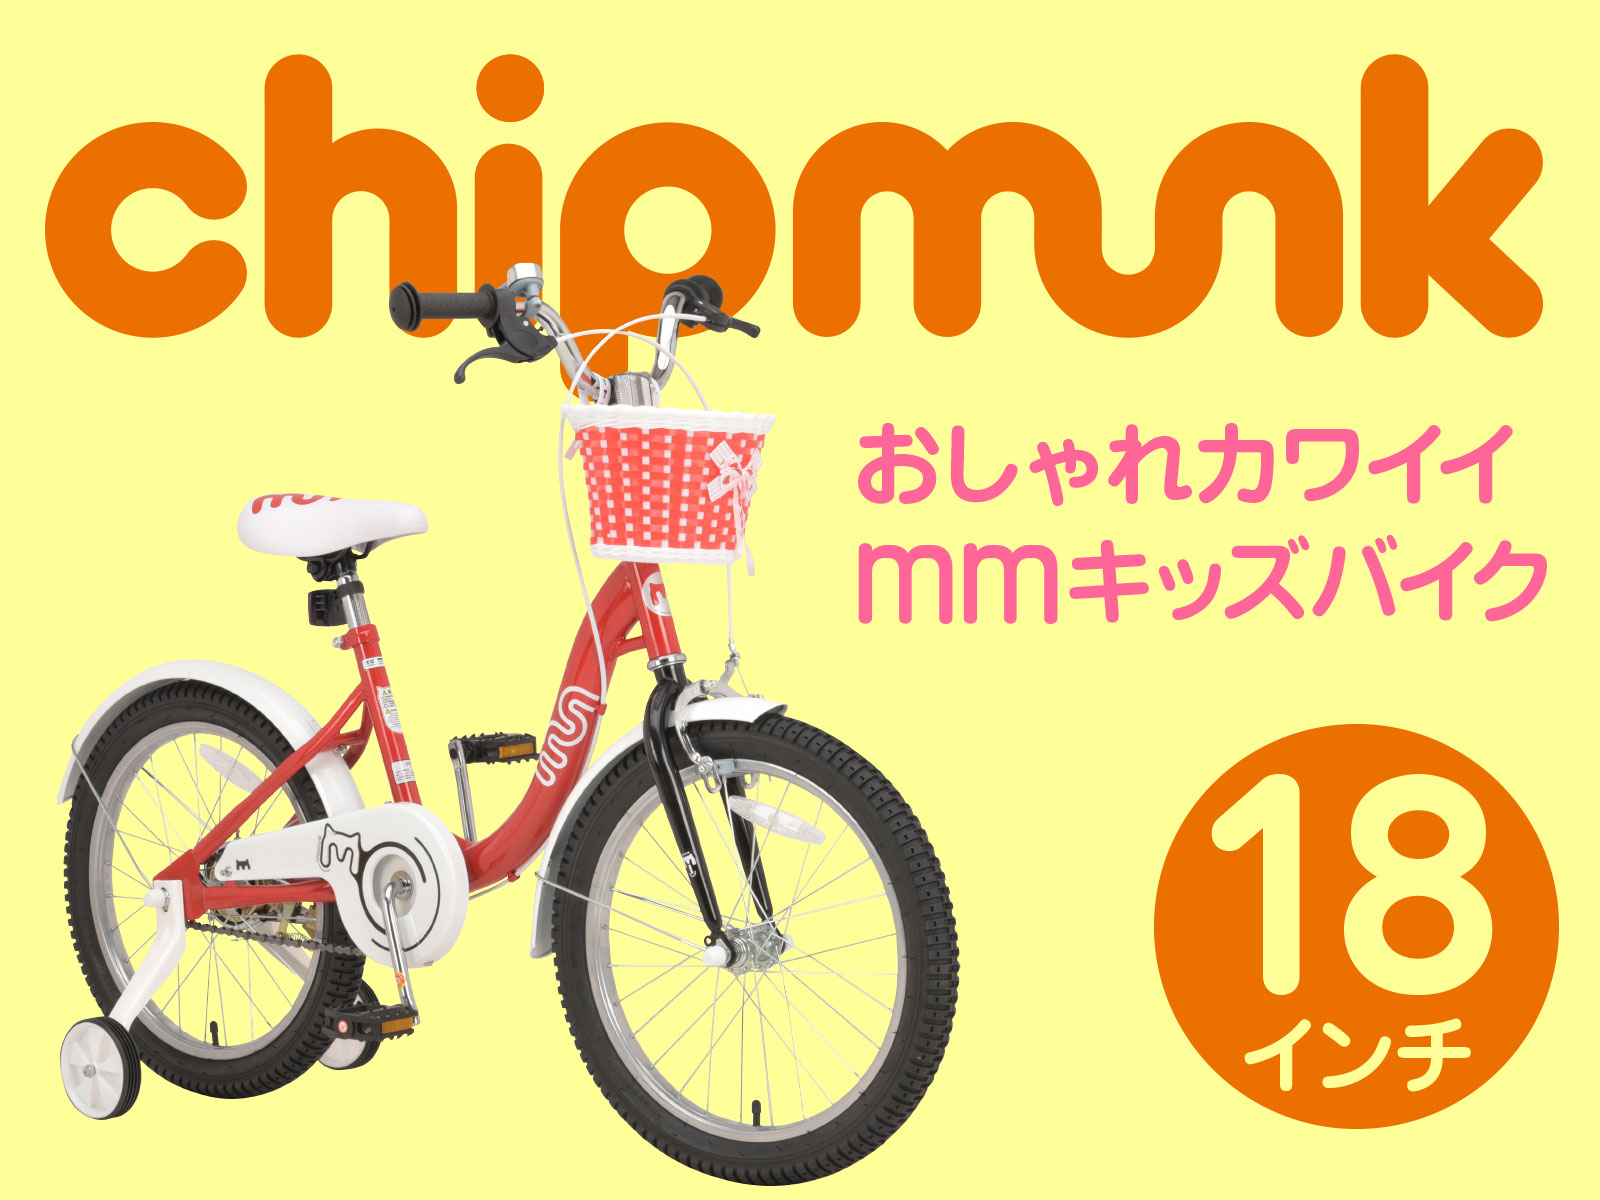 chipmunk_mm18-1